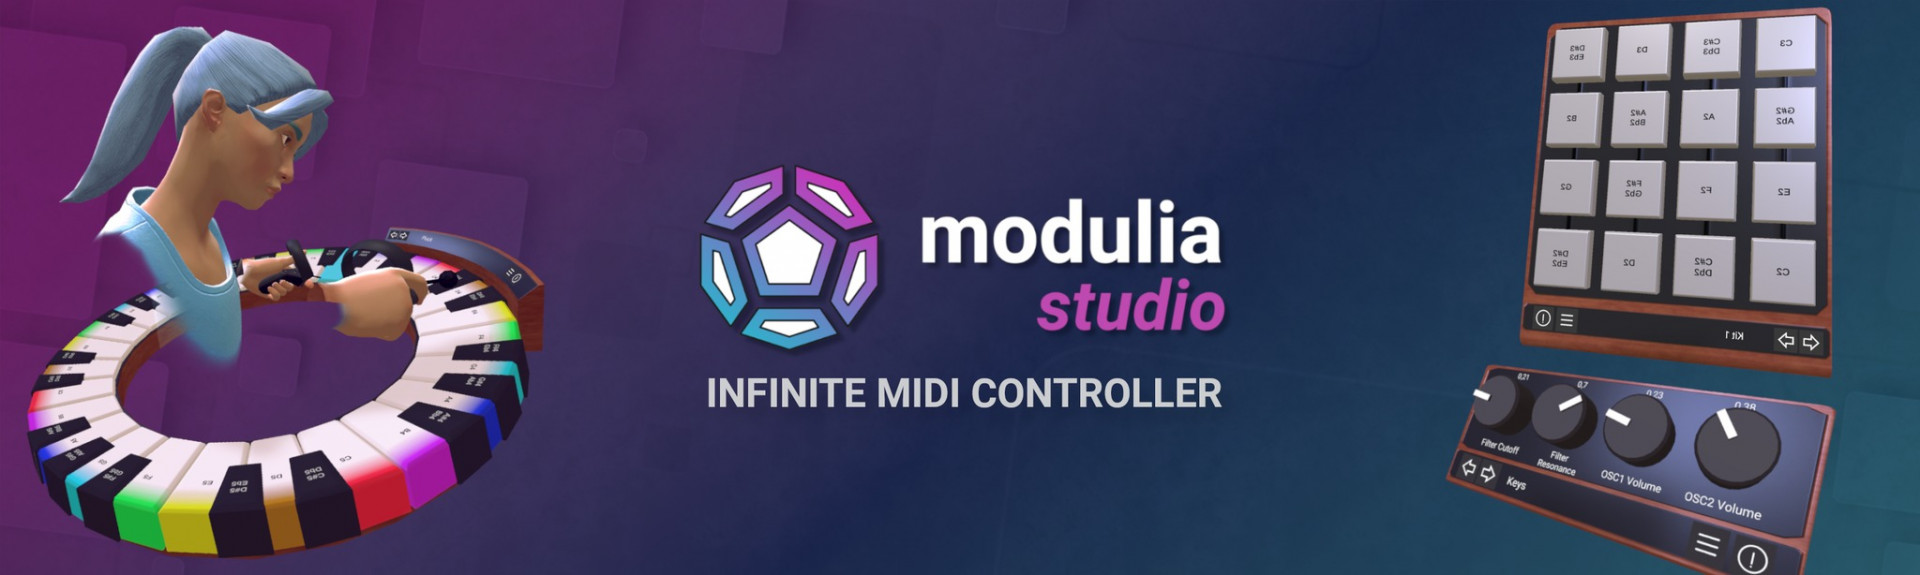 Modulia Studio